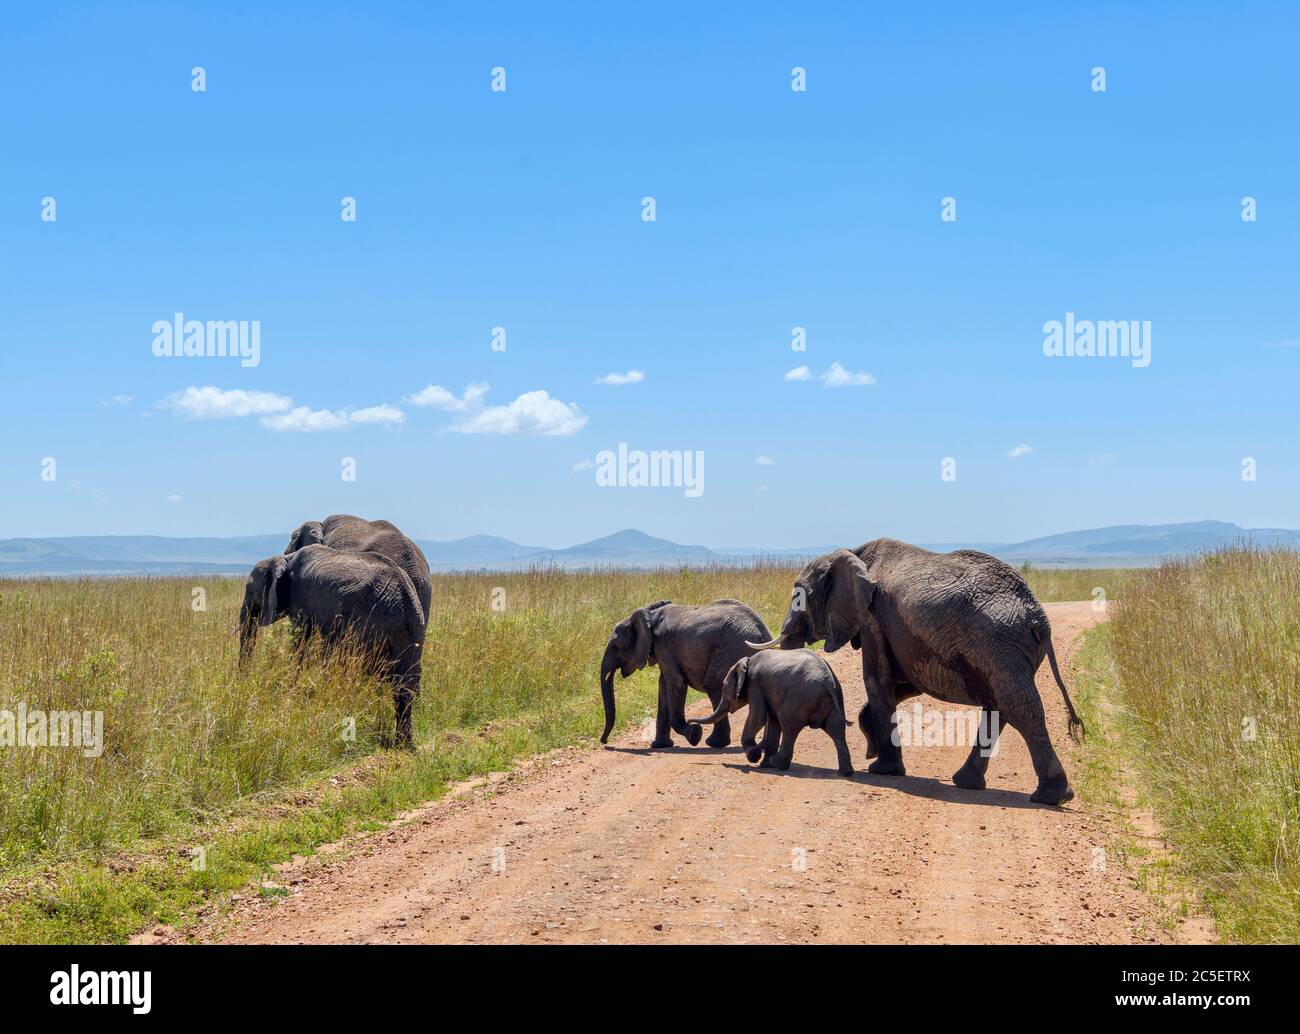 African bush elephant (Loxodonta africana). Family of African elephants crossing a dirt road, Masai Mara National Reserve, Kenya, East Africa Stock Photo